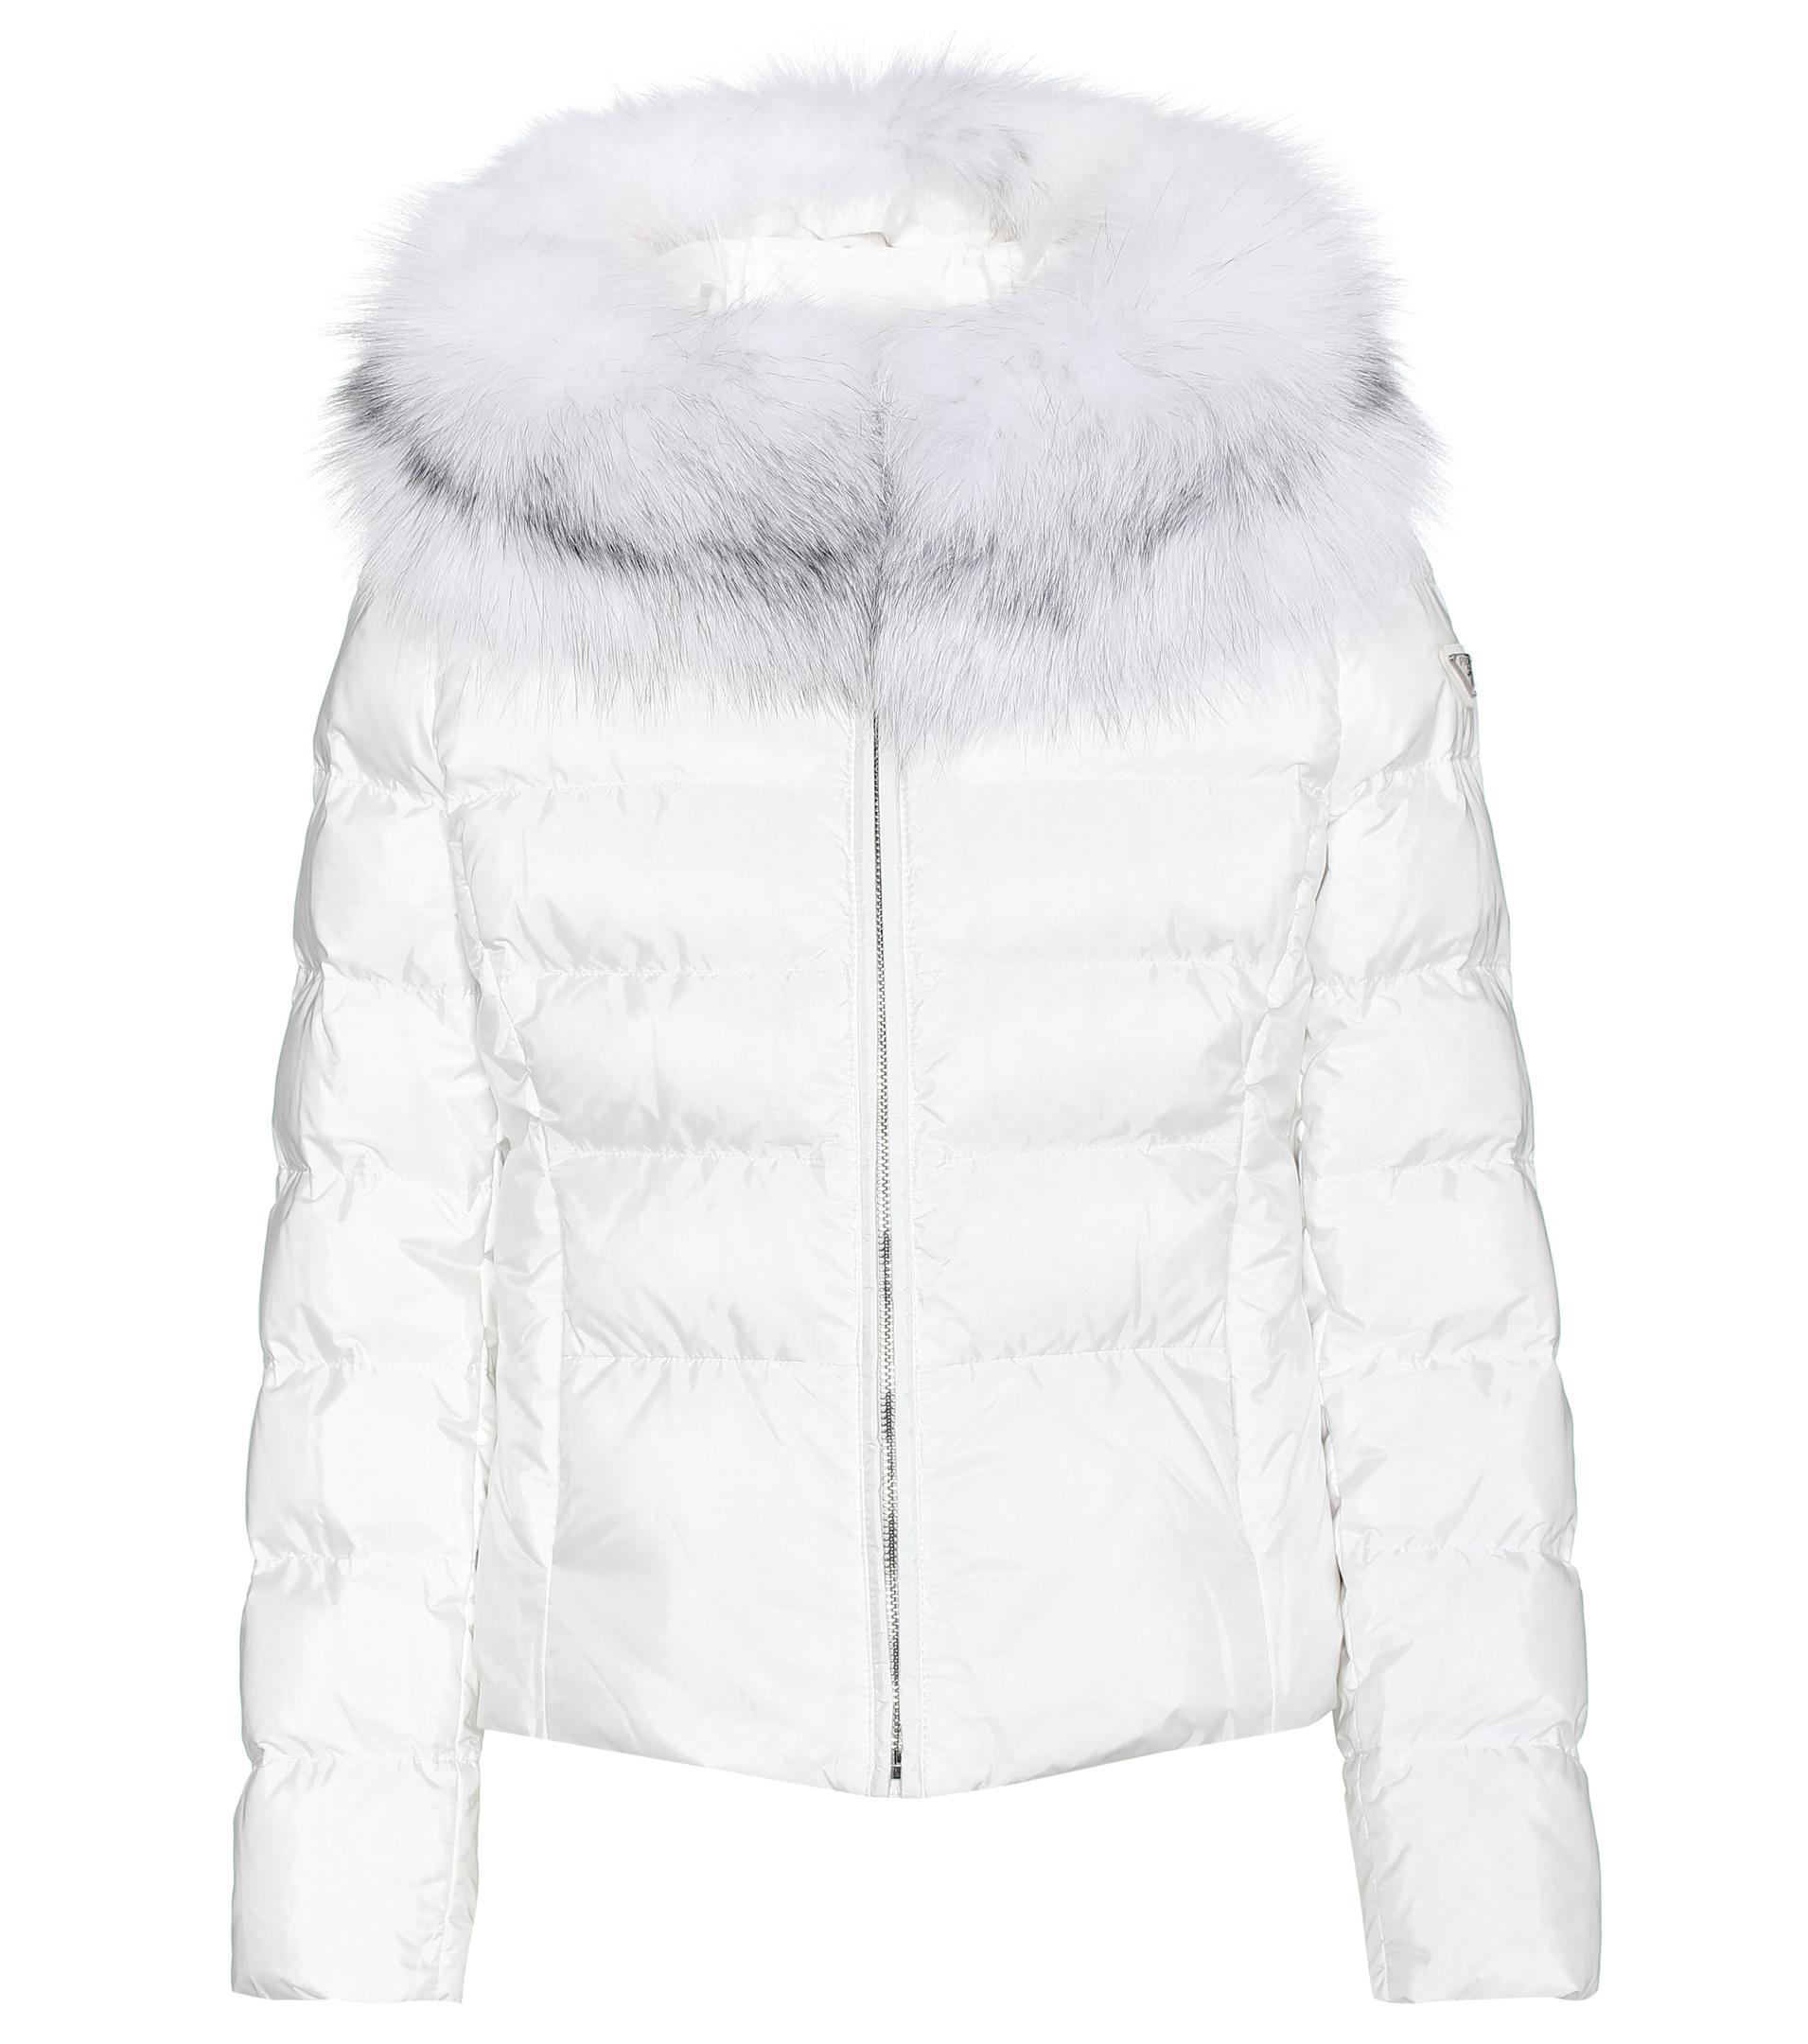 Prada Fur-trimmed Down Jacket in White - Lyst